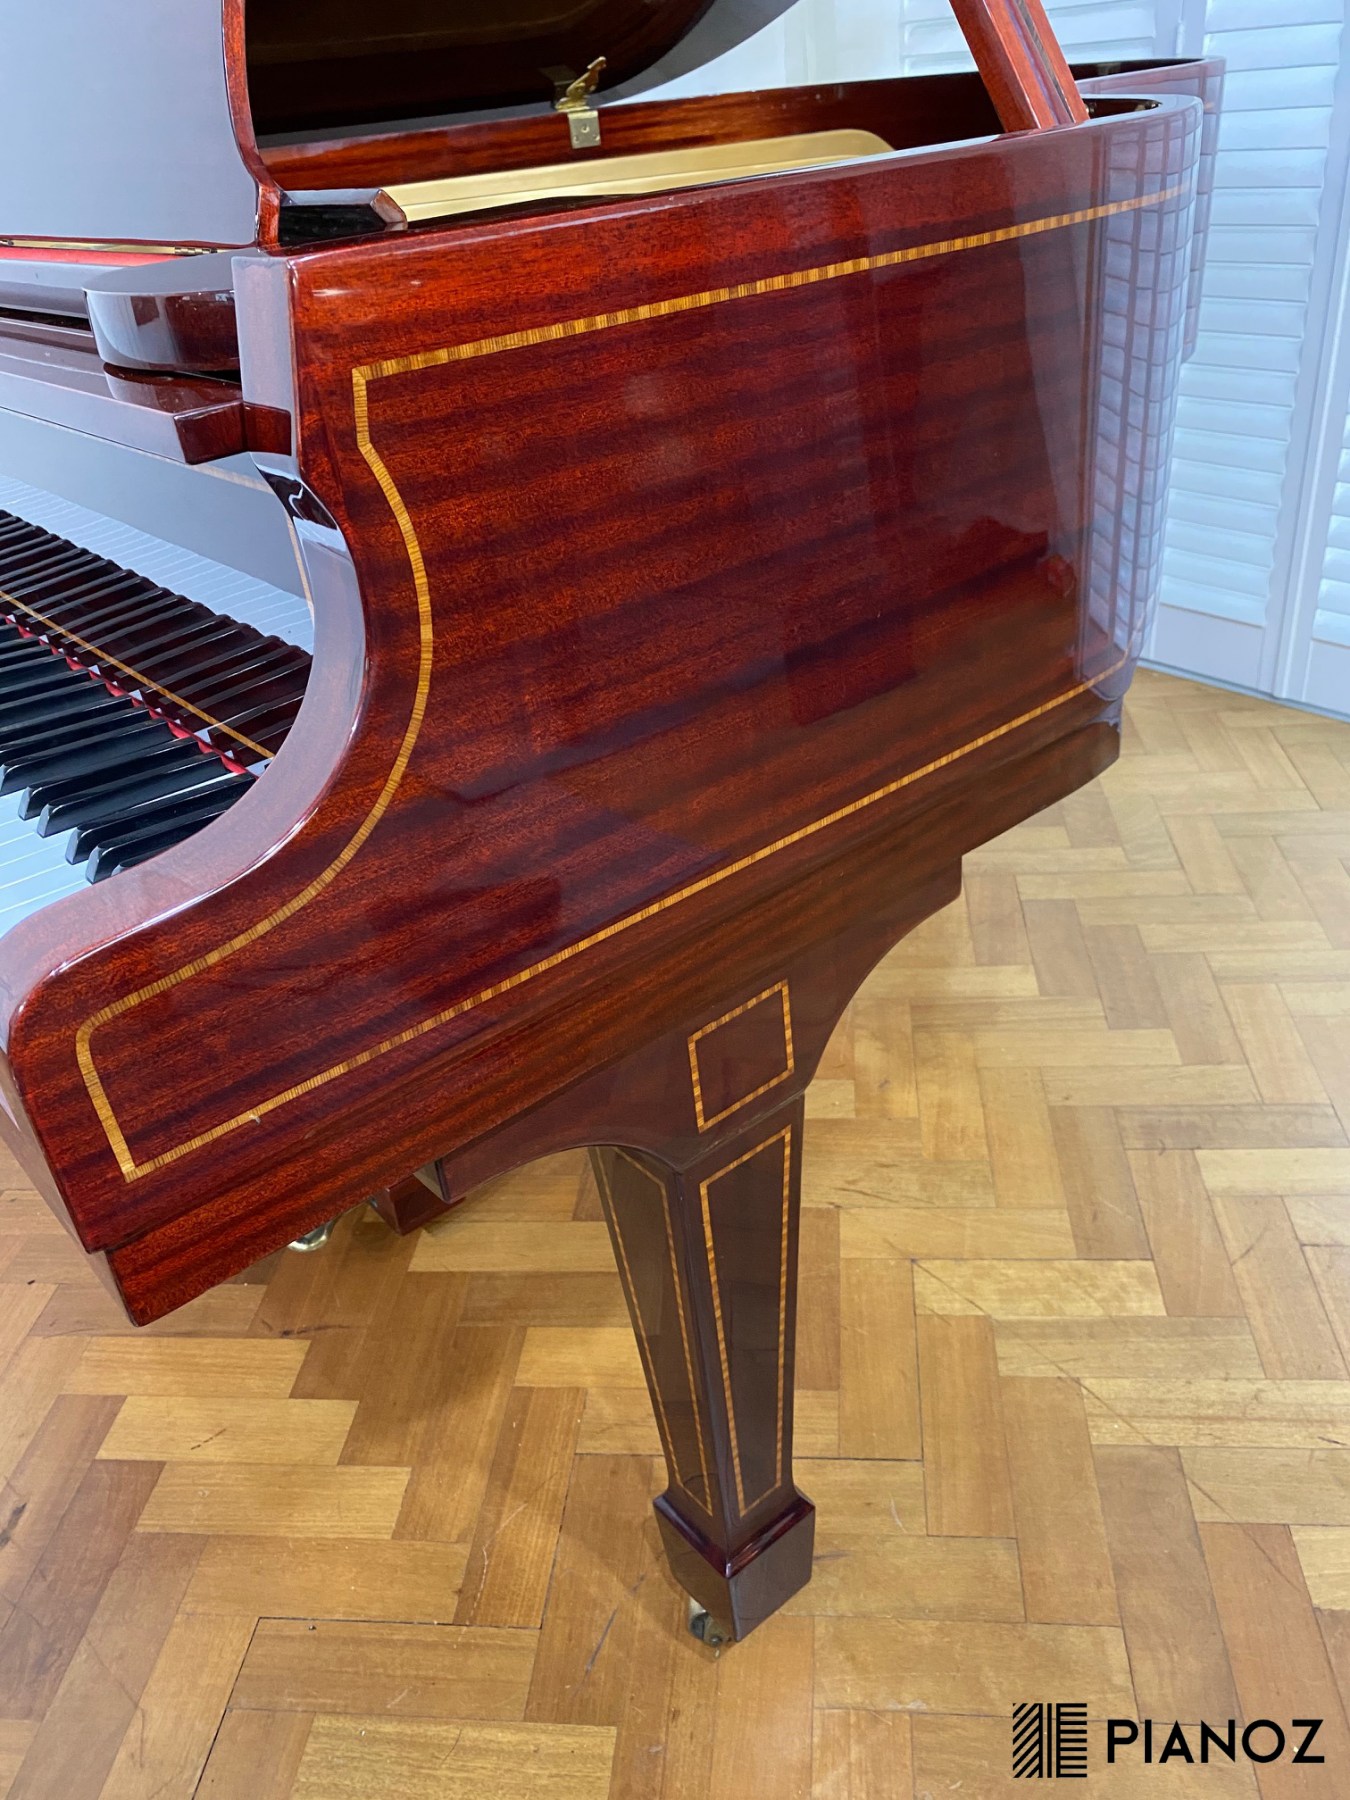 Reid Sohn Art Case Baby Grand Piano piano for sale in UK